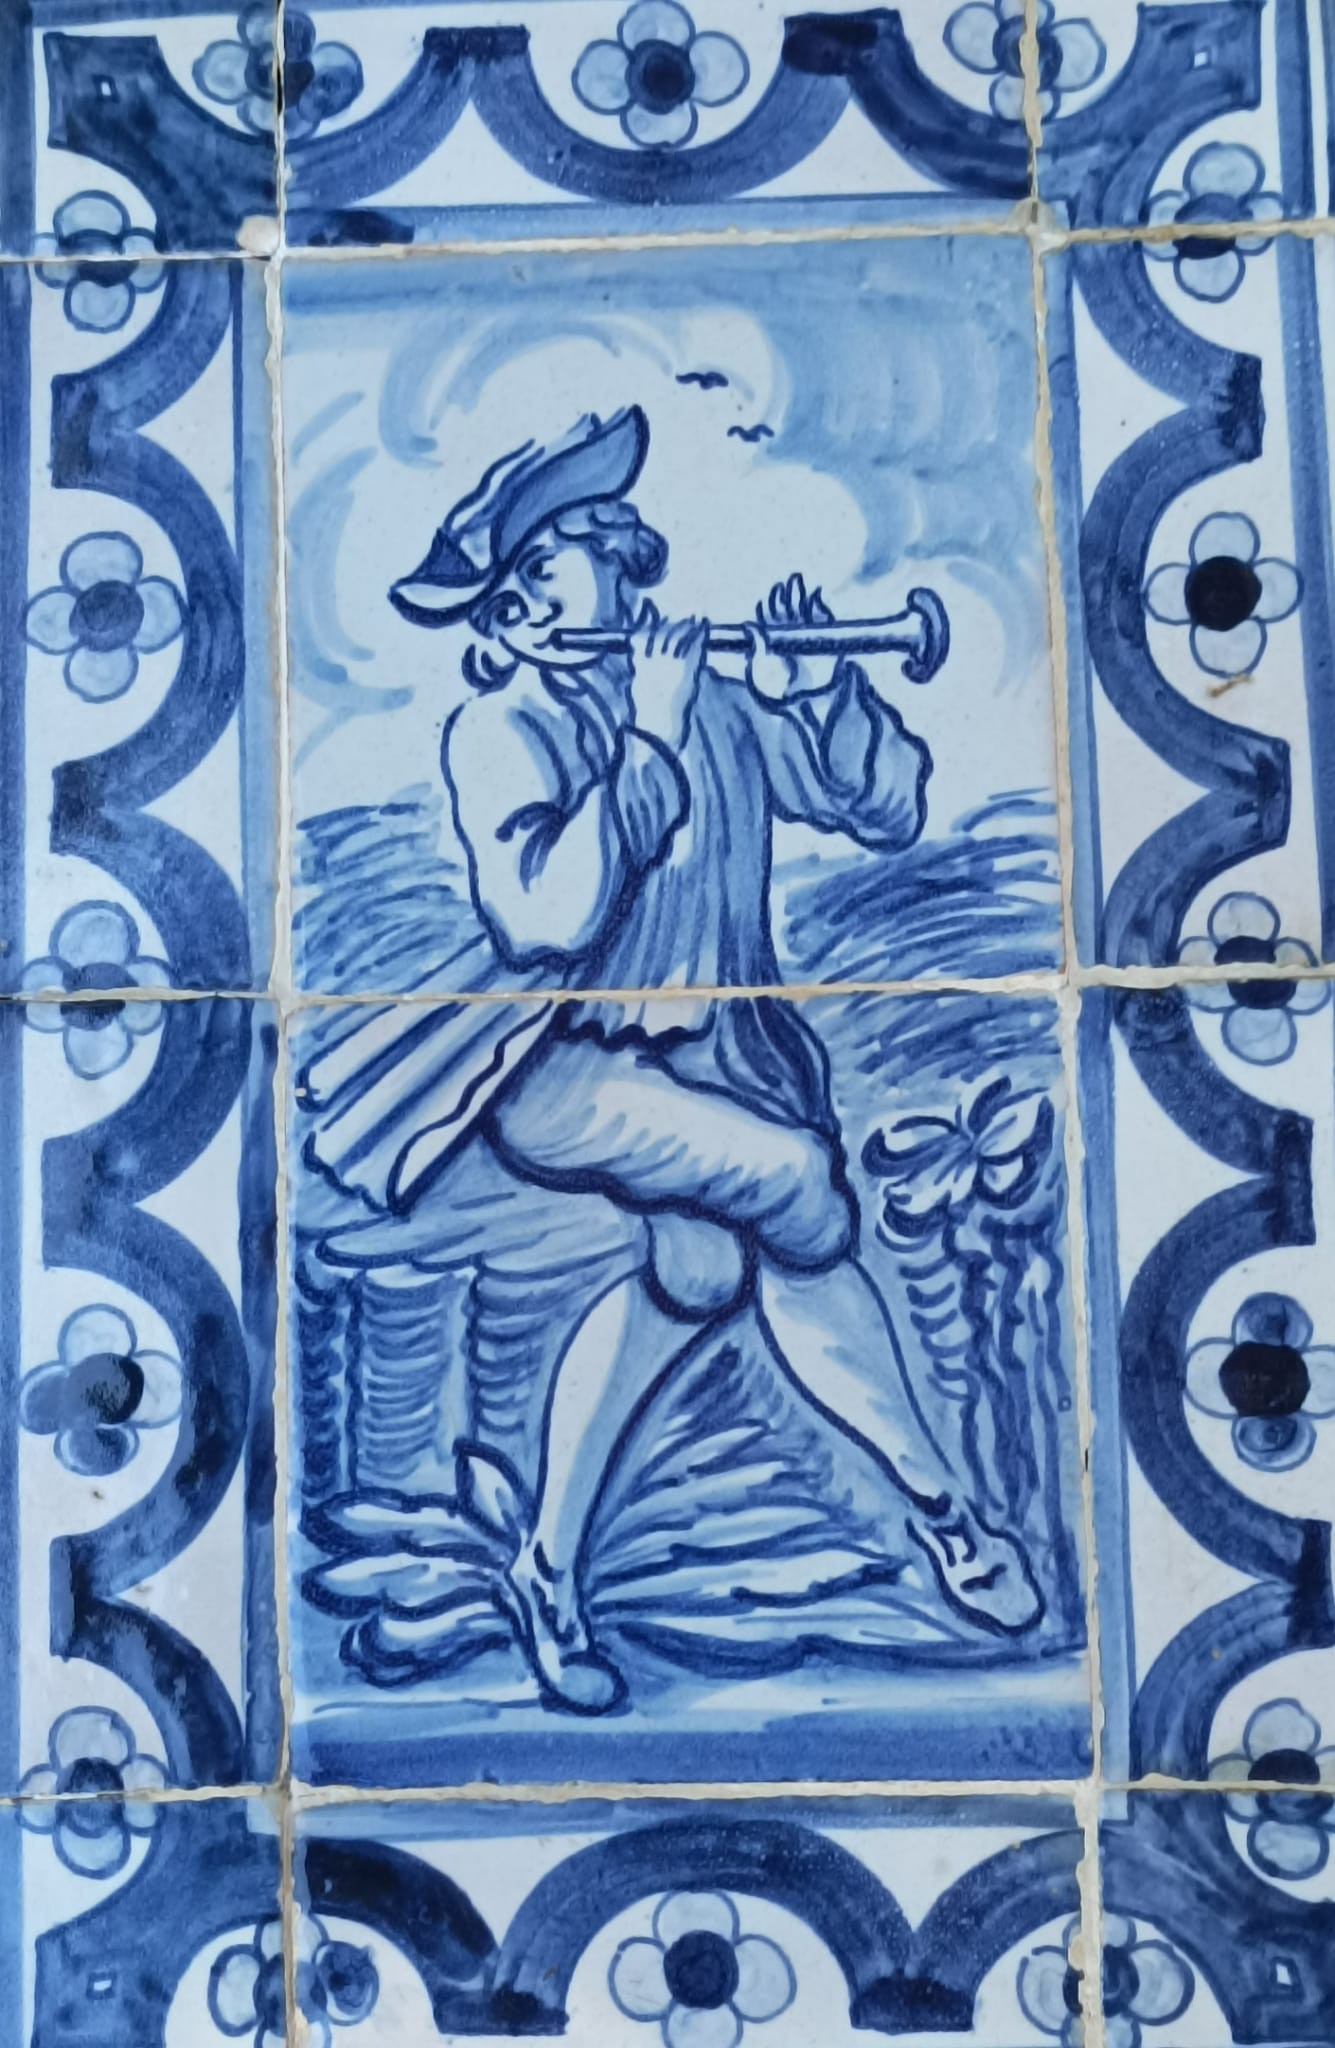 Flautista, painel de doze (12) azulejos em tons de azul.